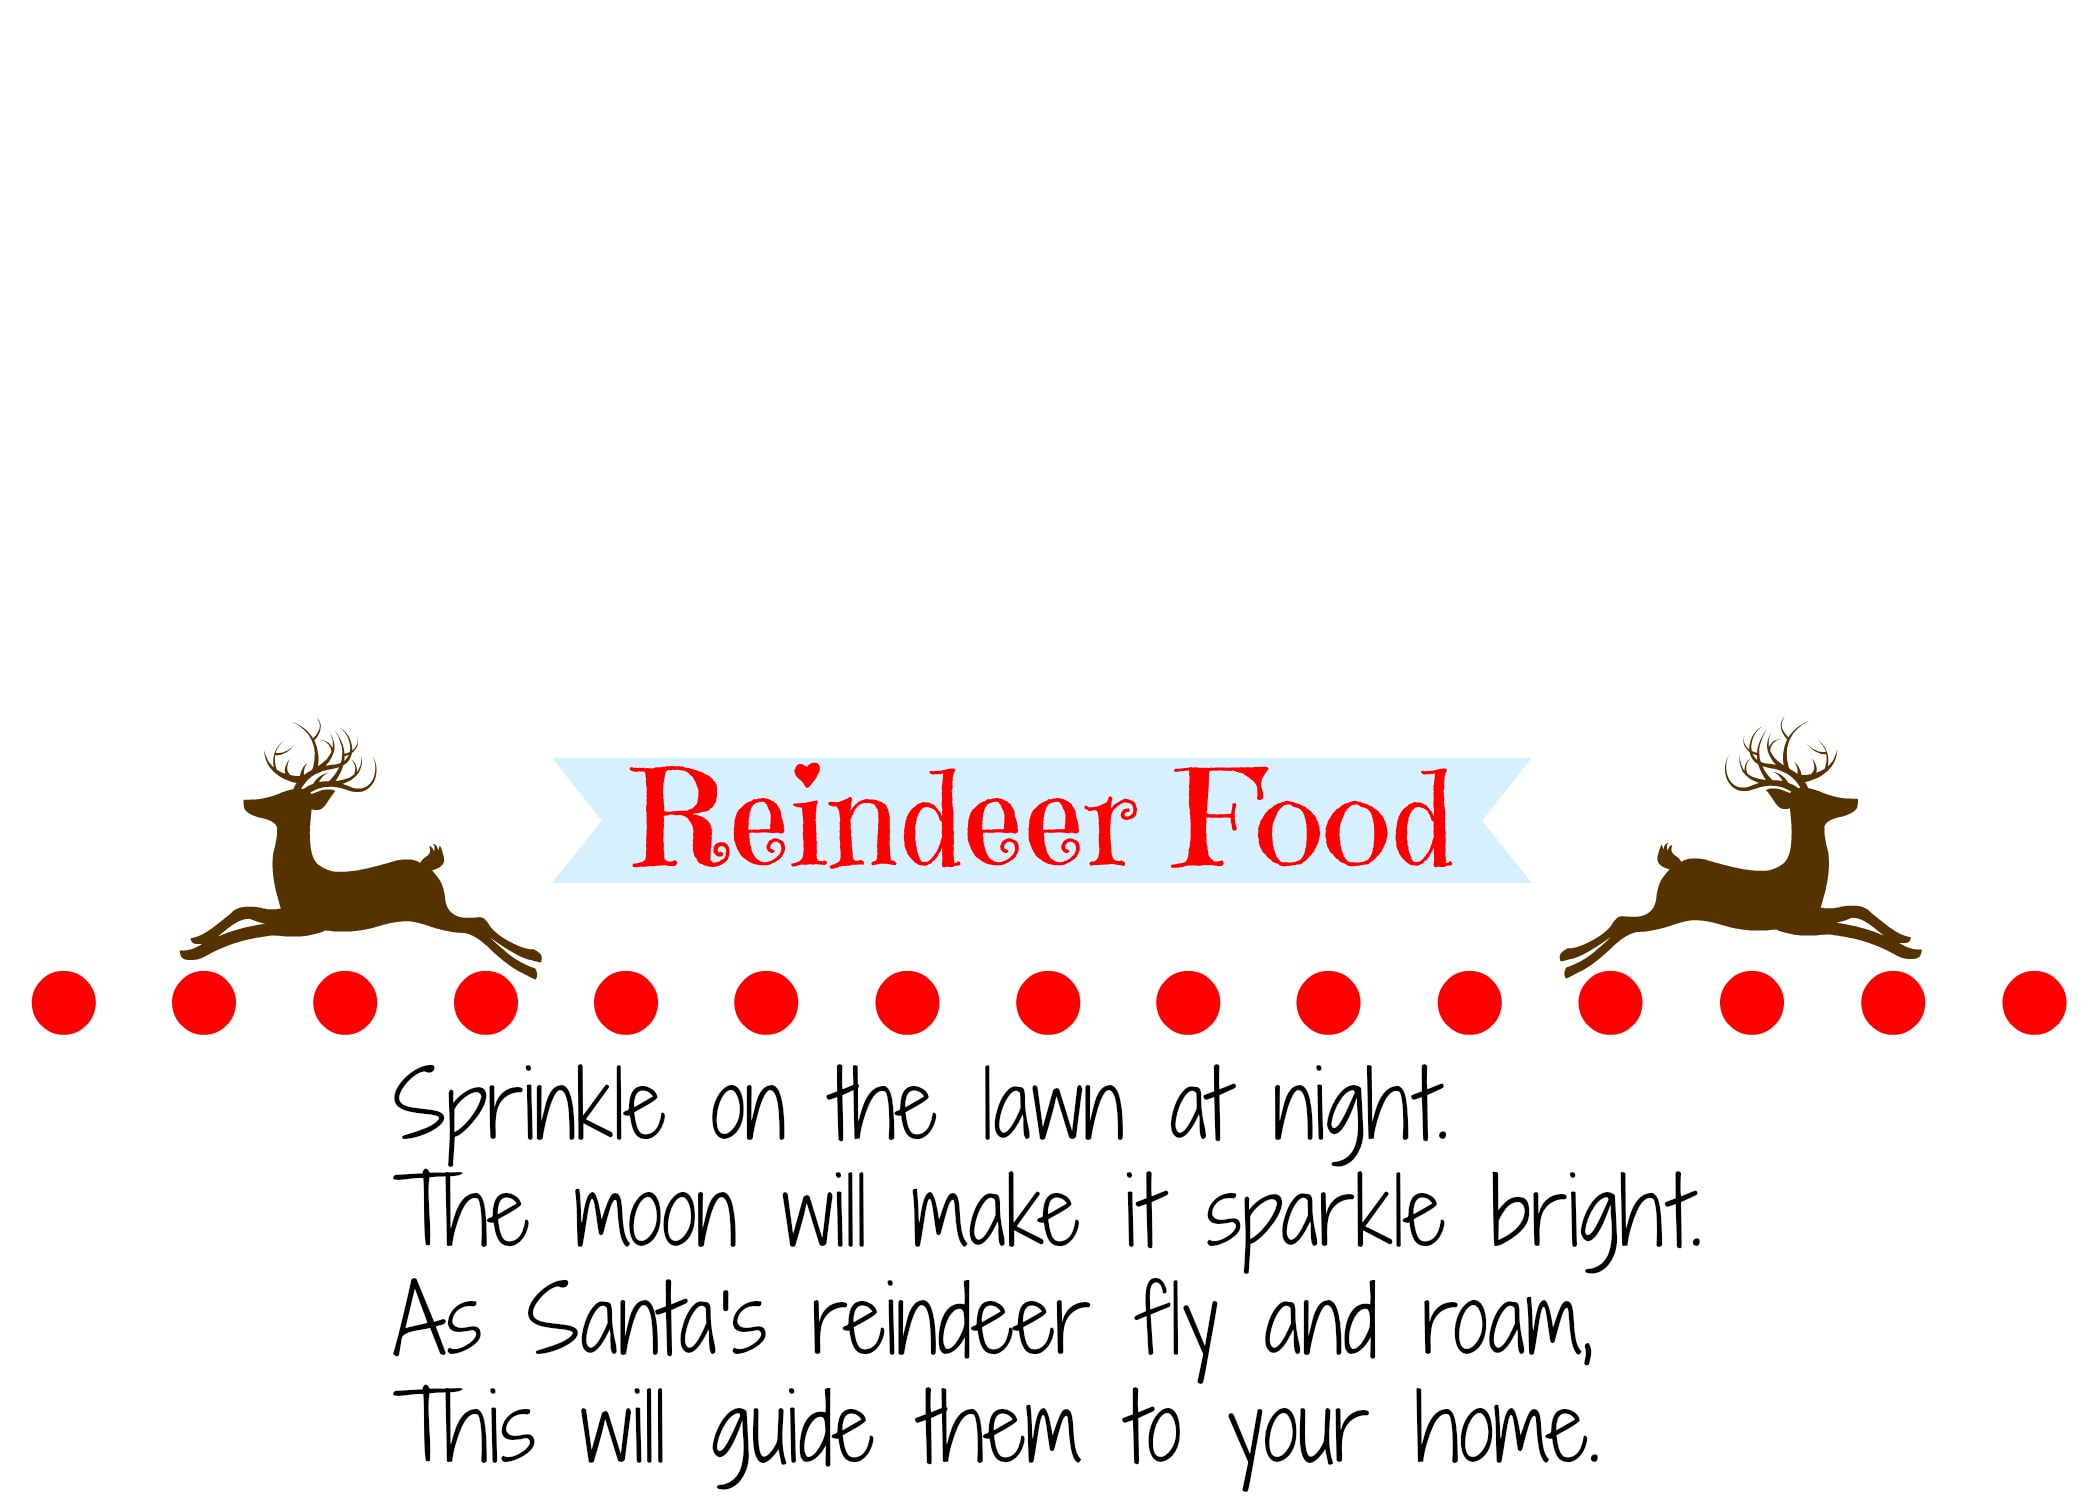 Homemade reindeer food recipe with printable labels